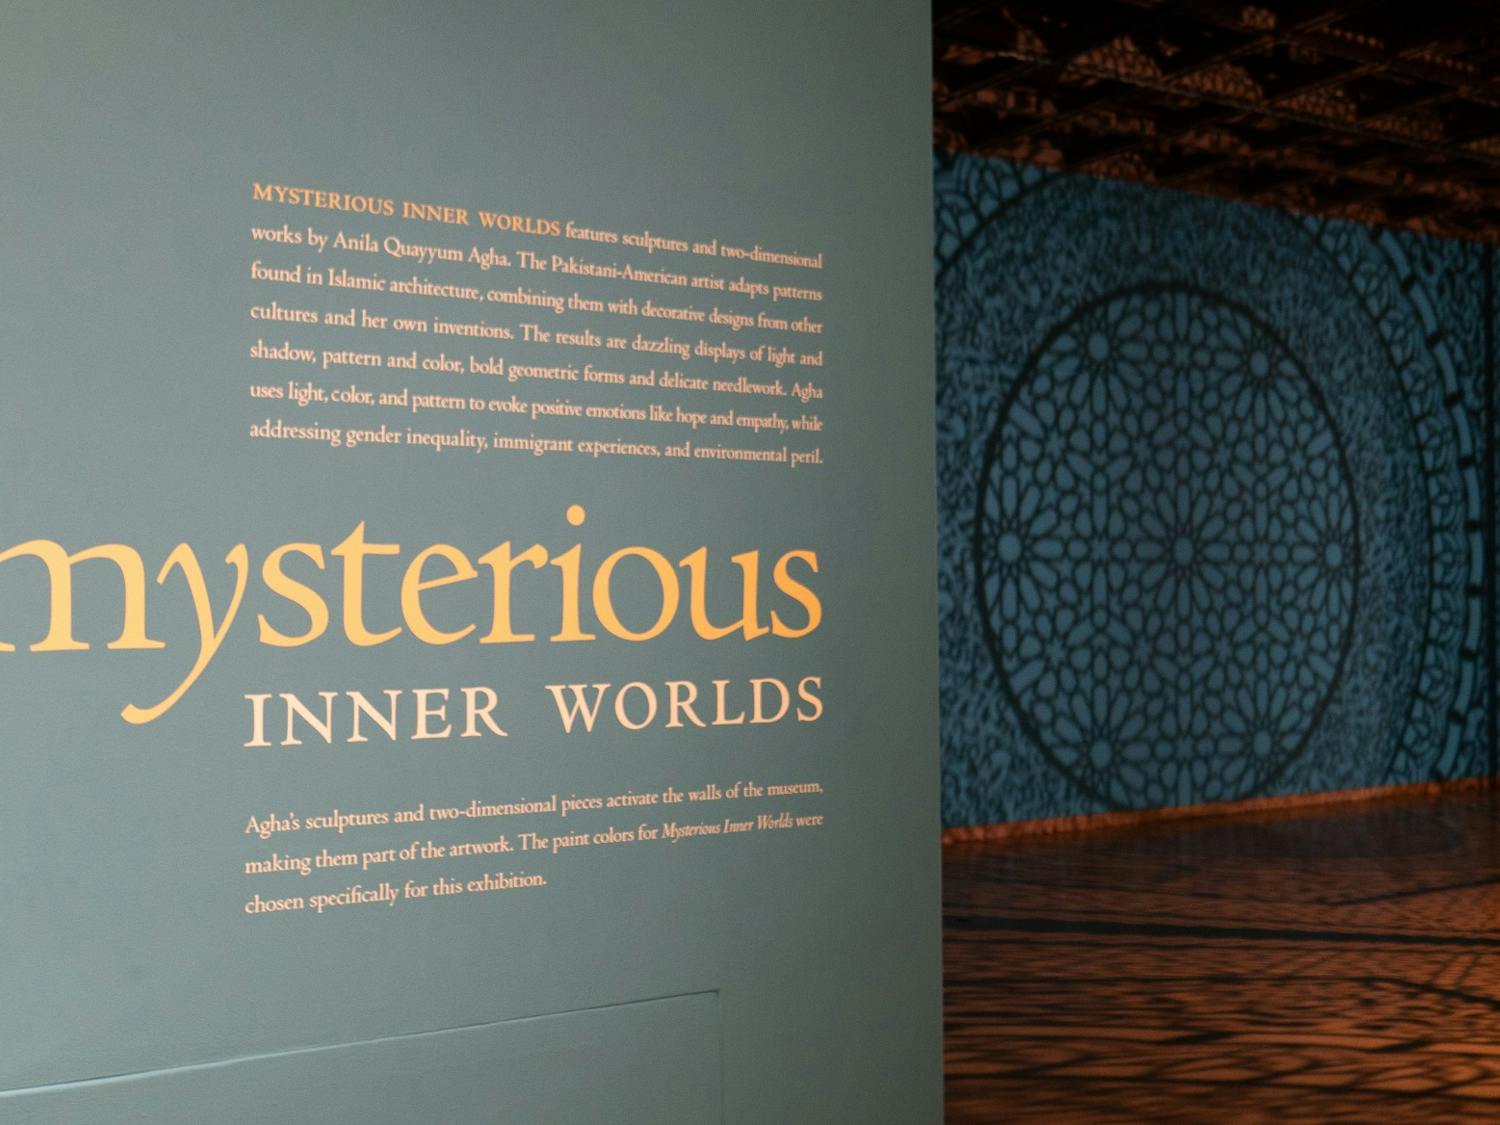 Mysterious Inner Worlds exhibit